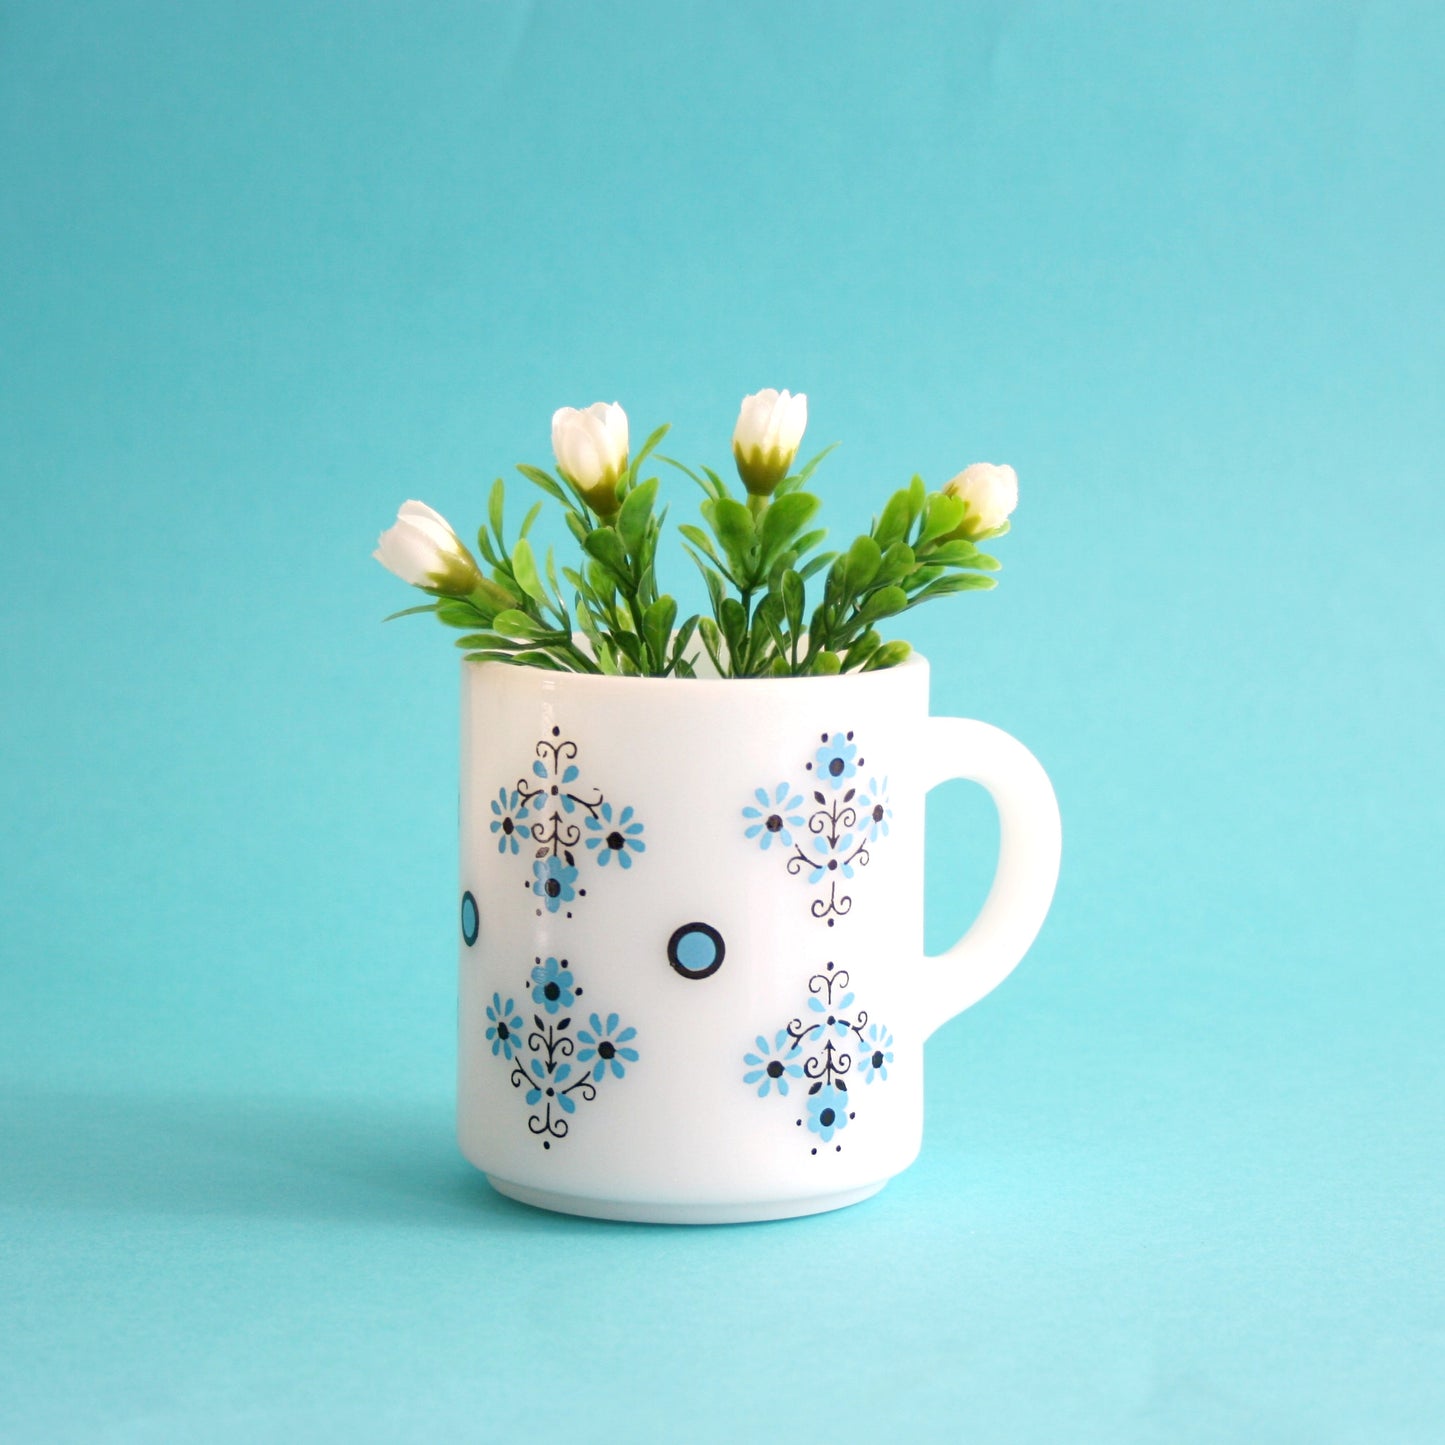 SOLD - Vintage Aqua Blue Flowers Milk Glass Mug by Glasbake